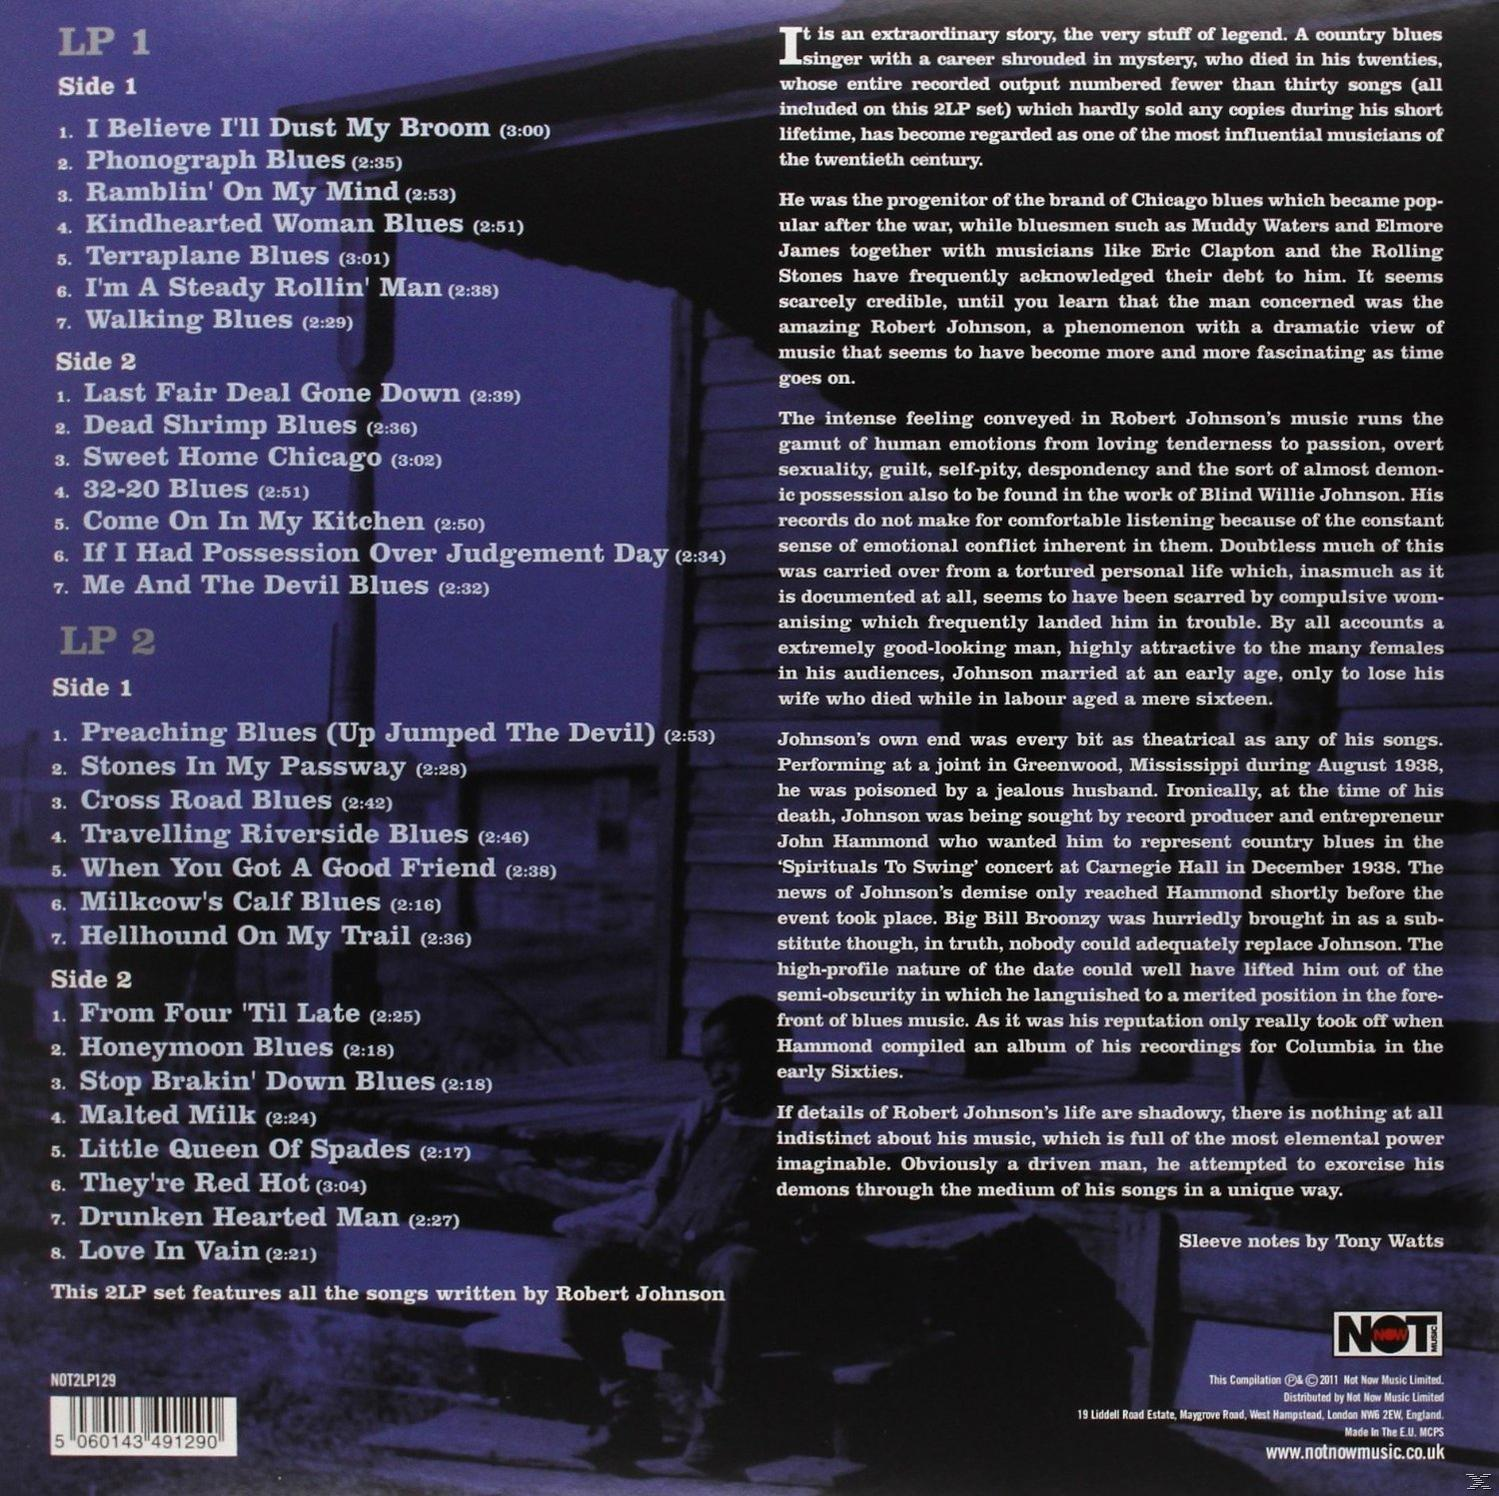 - Robert Collection Complete Johnson The (Vinyl) -